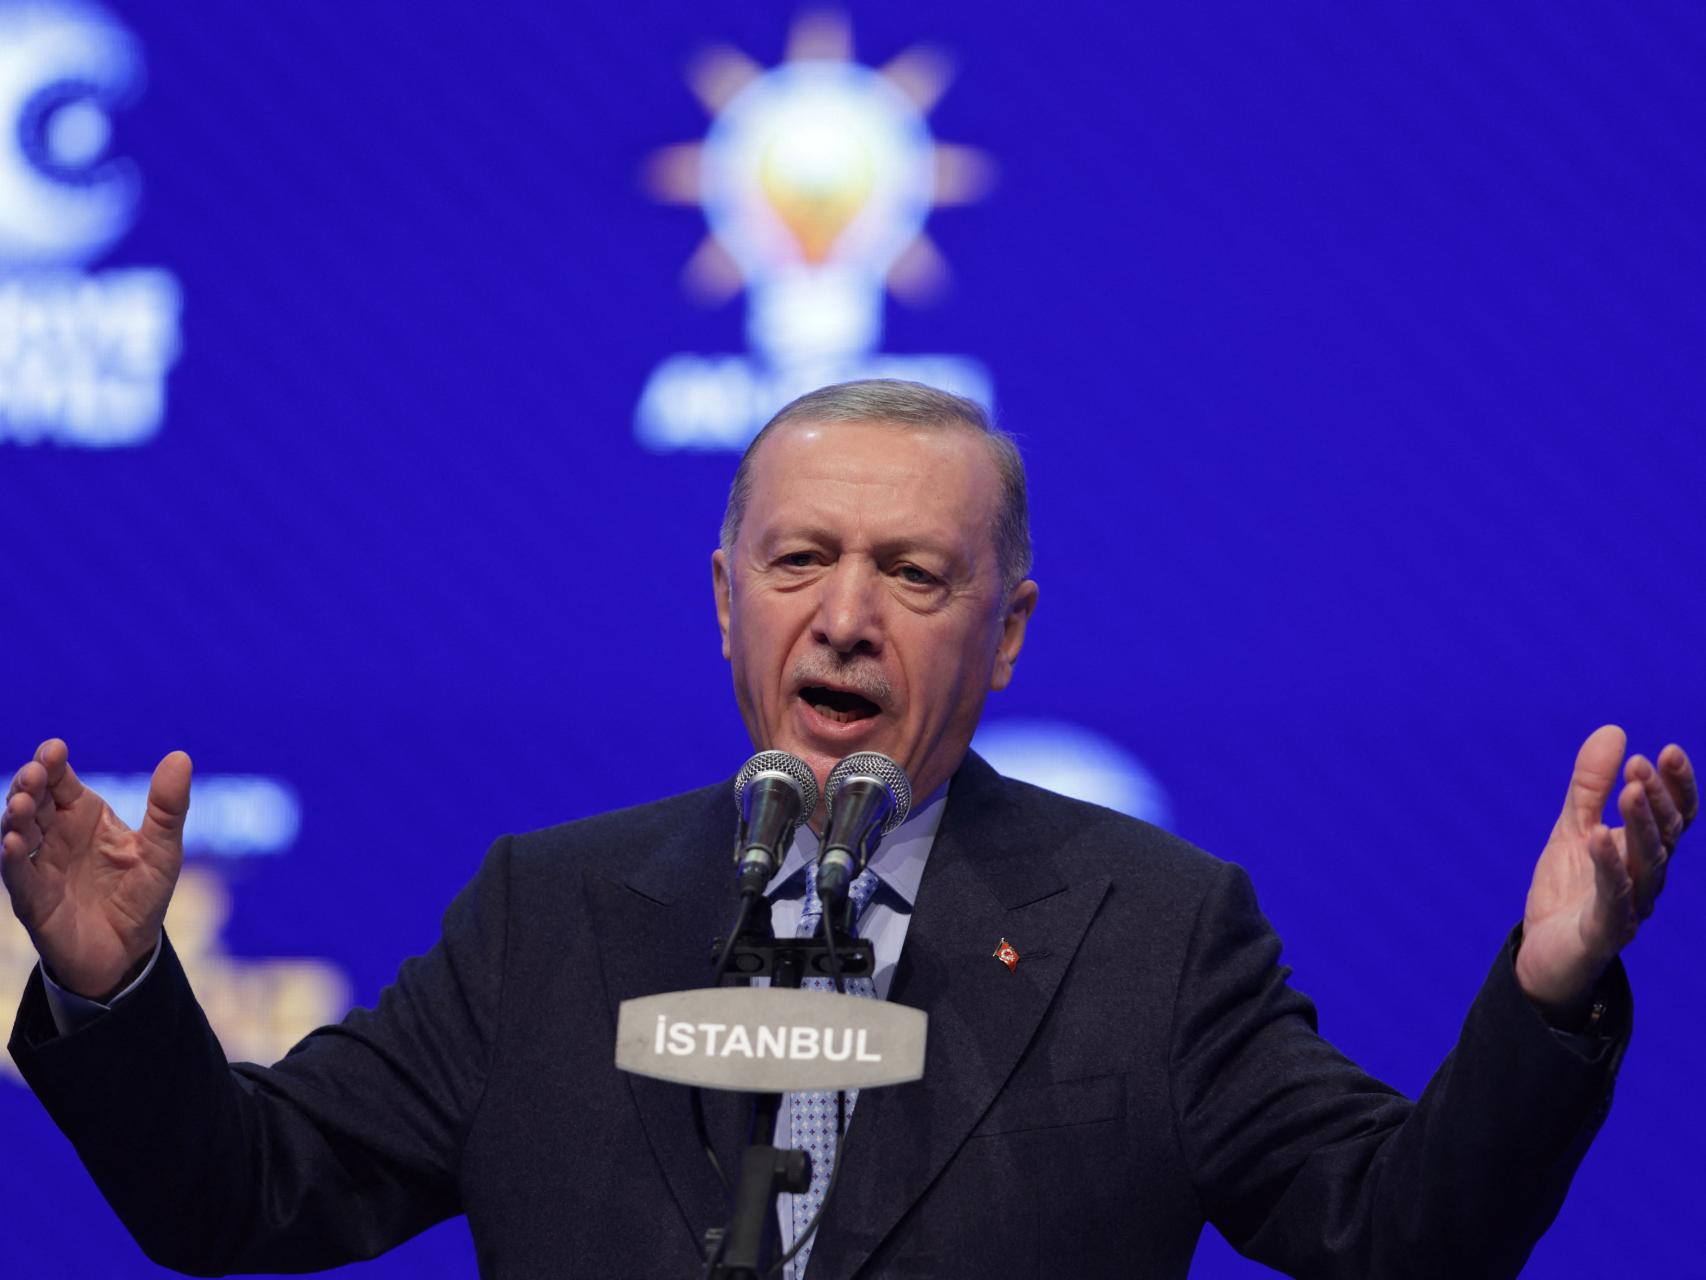 El presidente turco, Recep Tayyip Erdoğan.